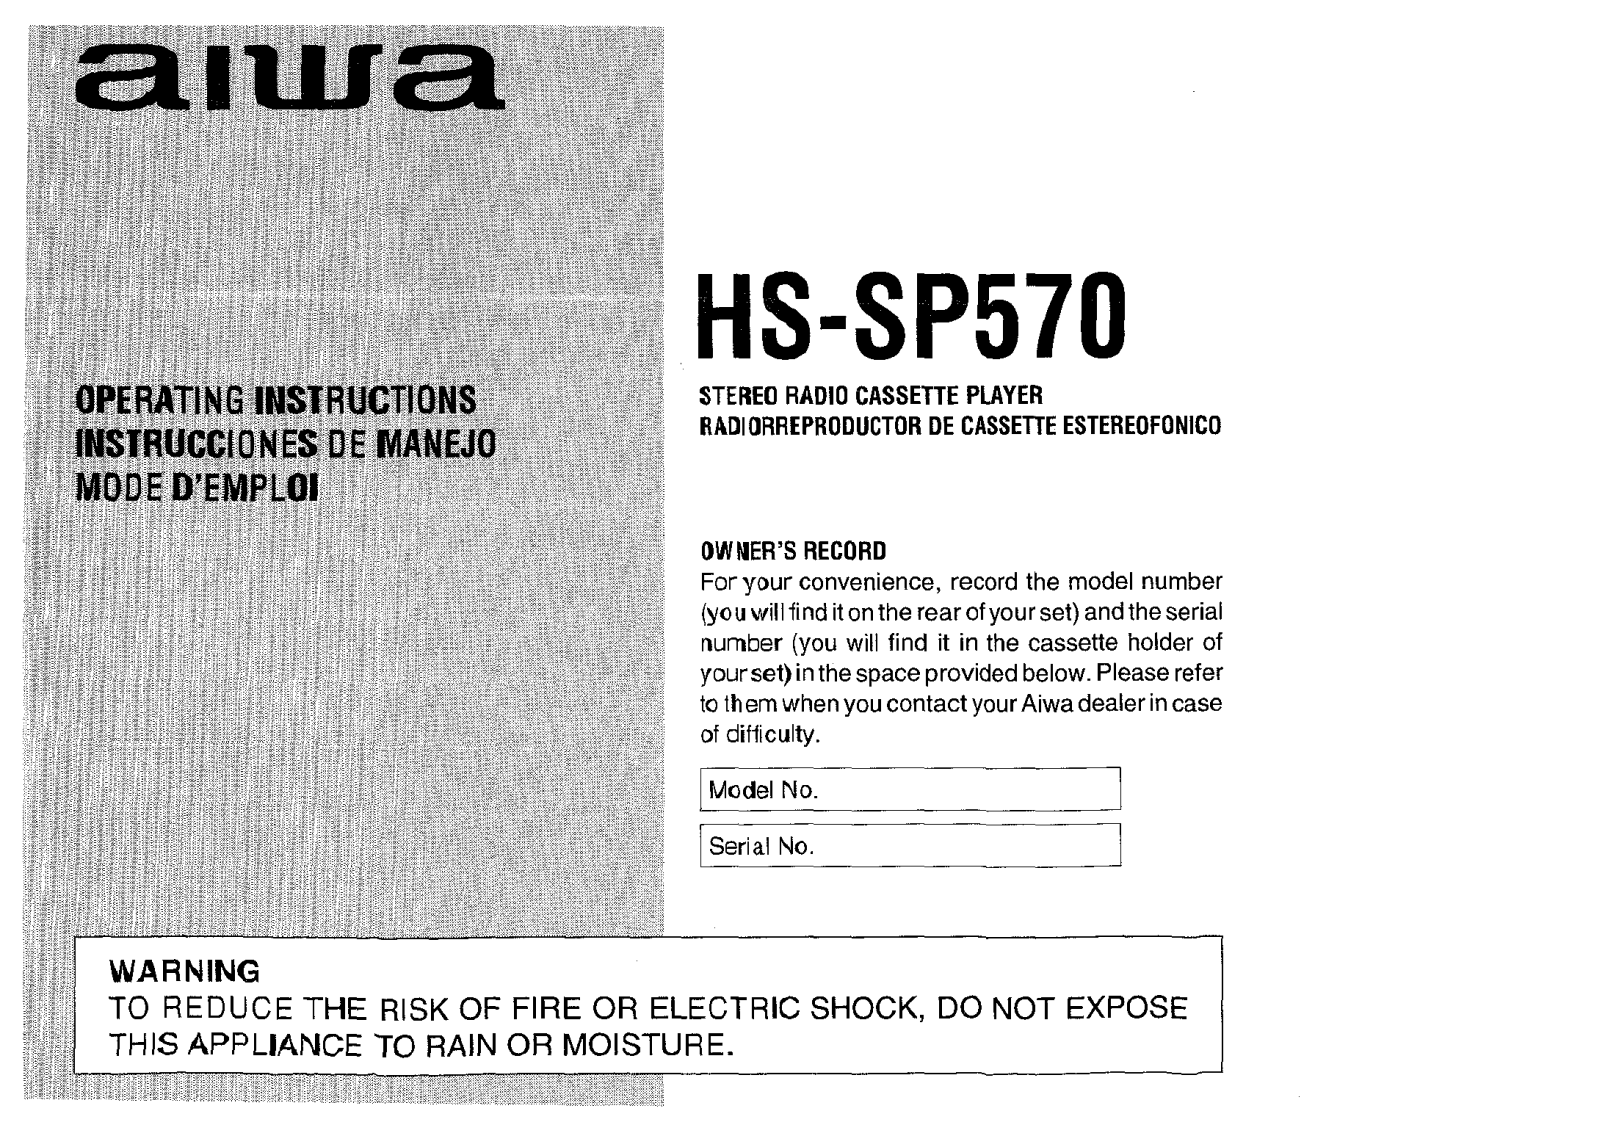 Sony HSSP570 OPERATING MANUAL